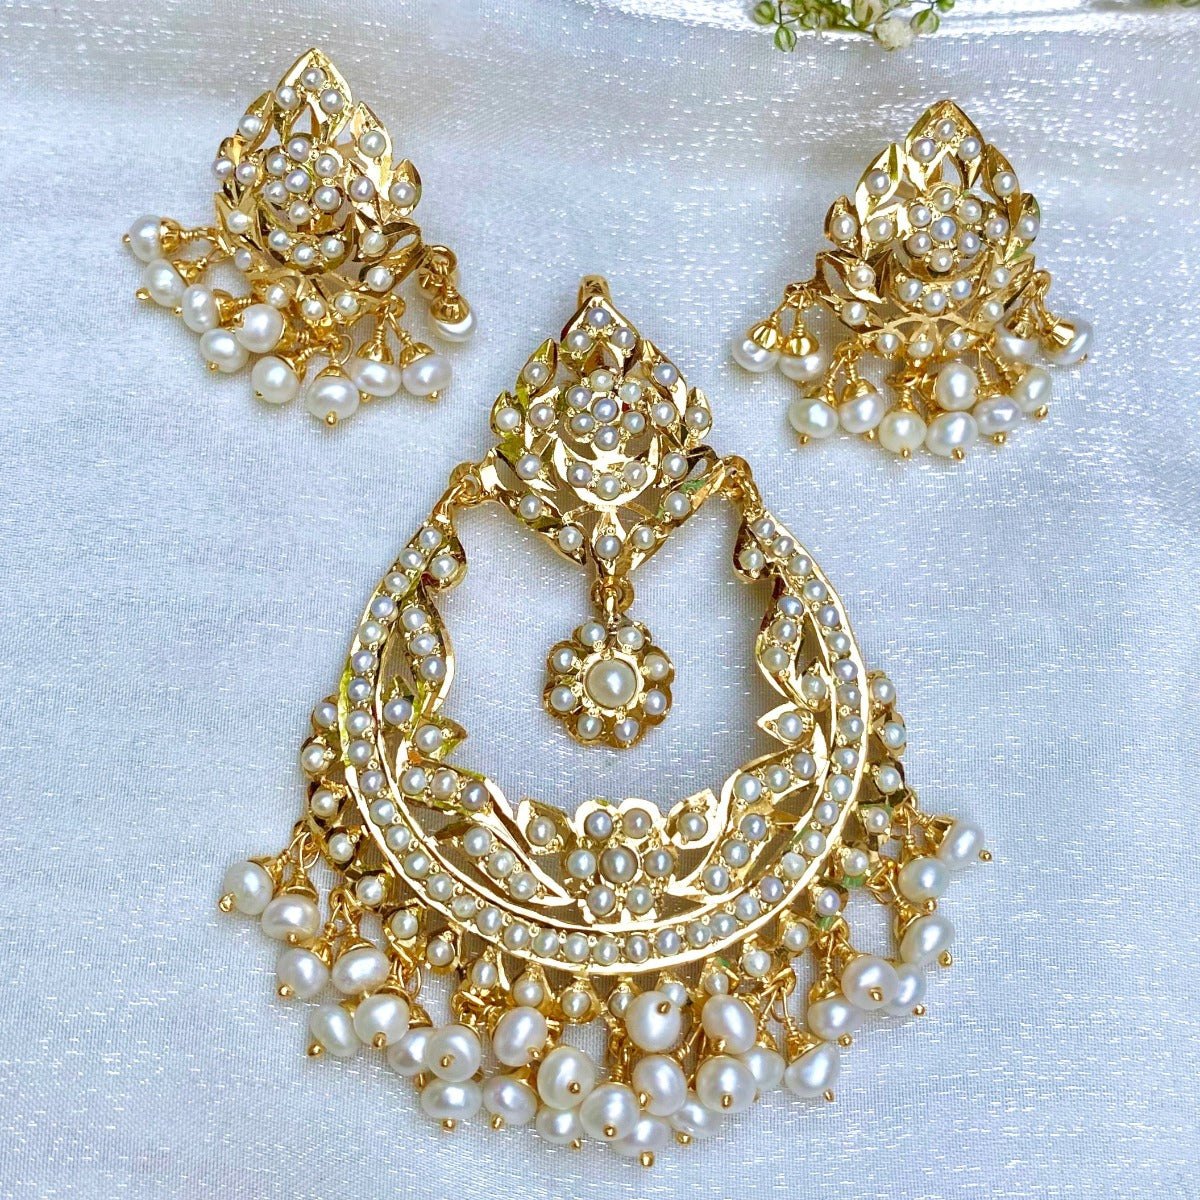 amritsari jadau jewellery in pearl